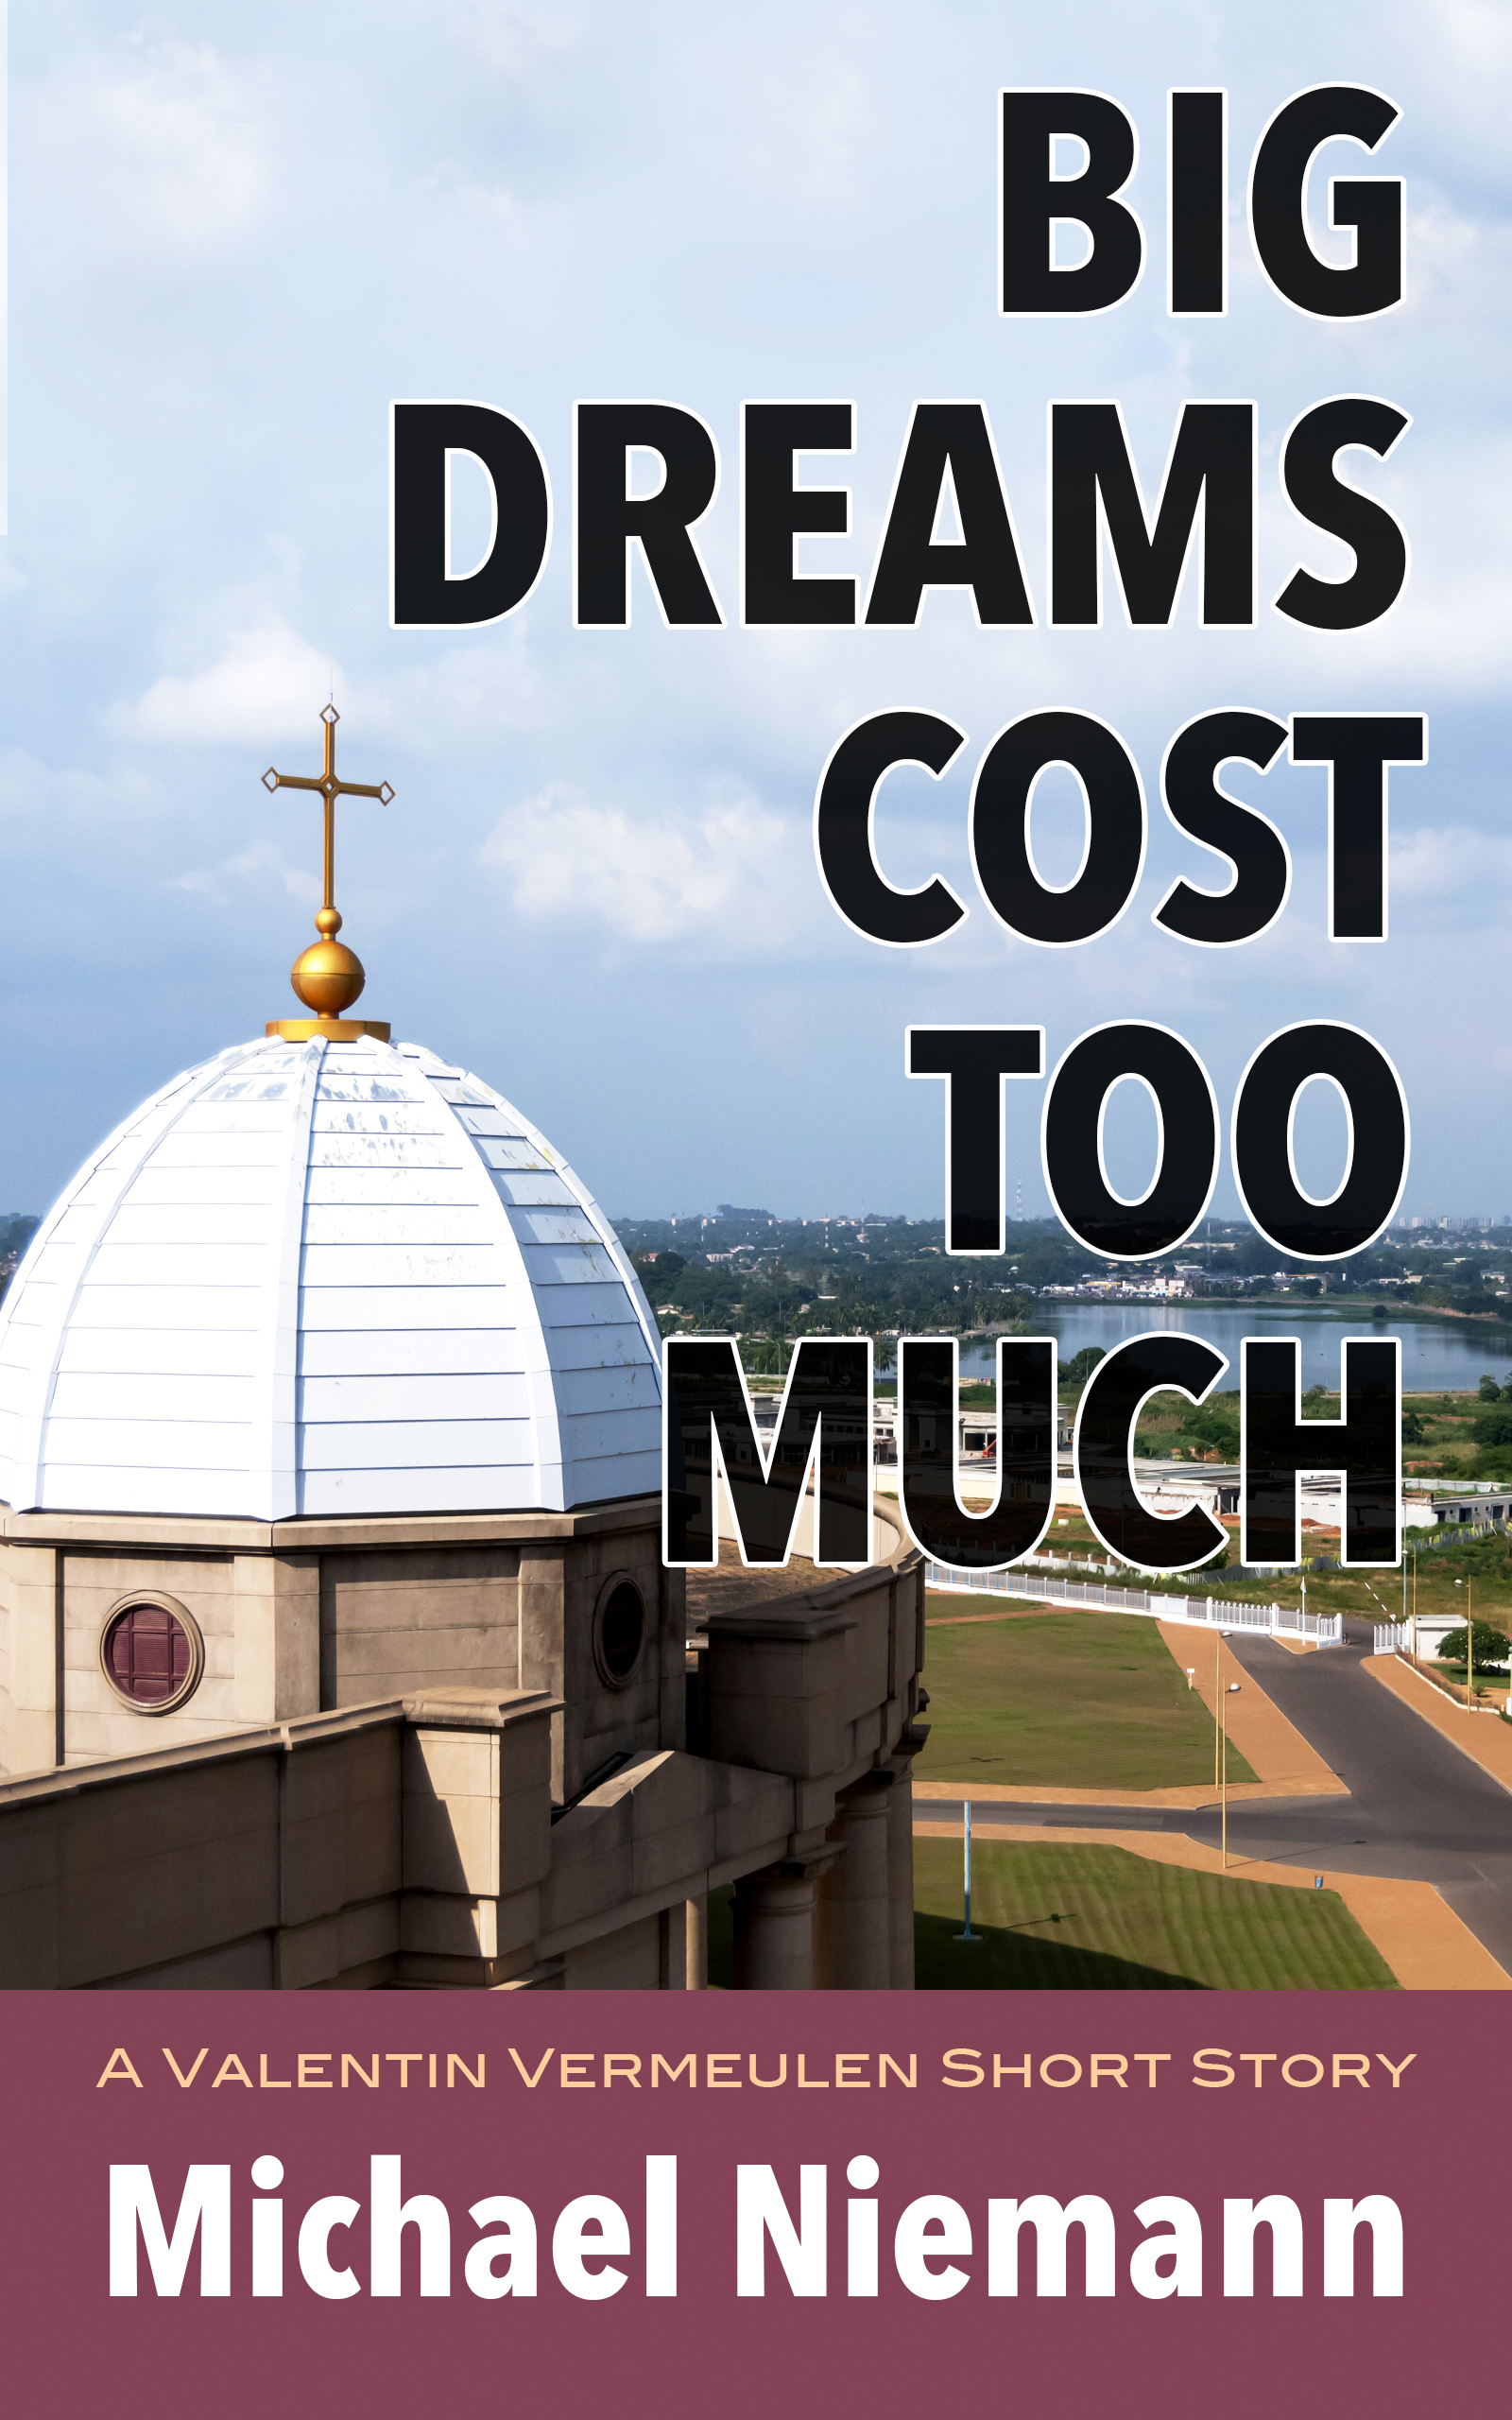 Big Dreams Cost Too Much: A Valentin Vermeulen Short Story by Michael Niemann